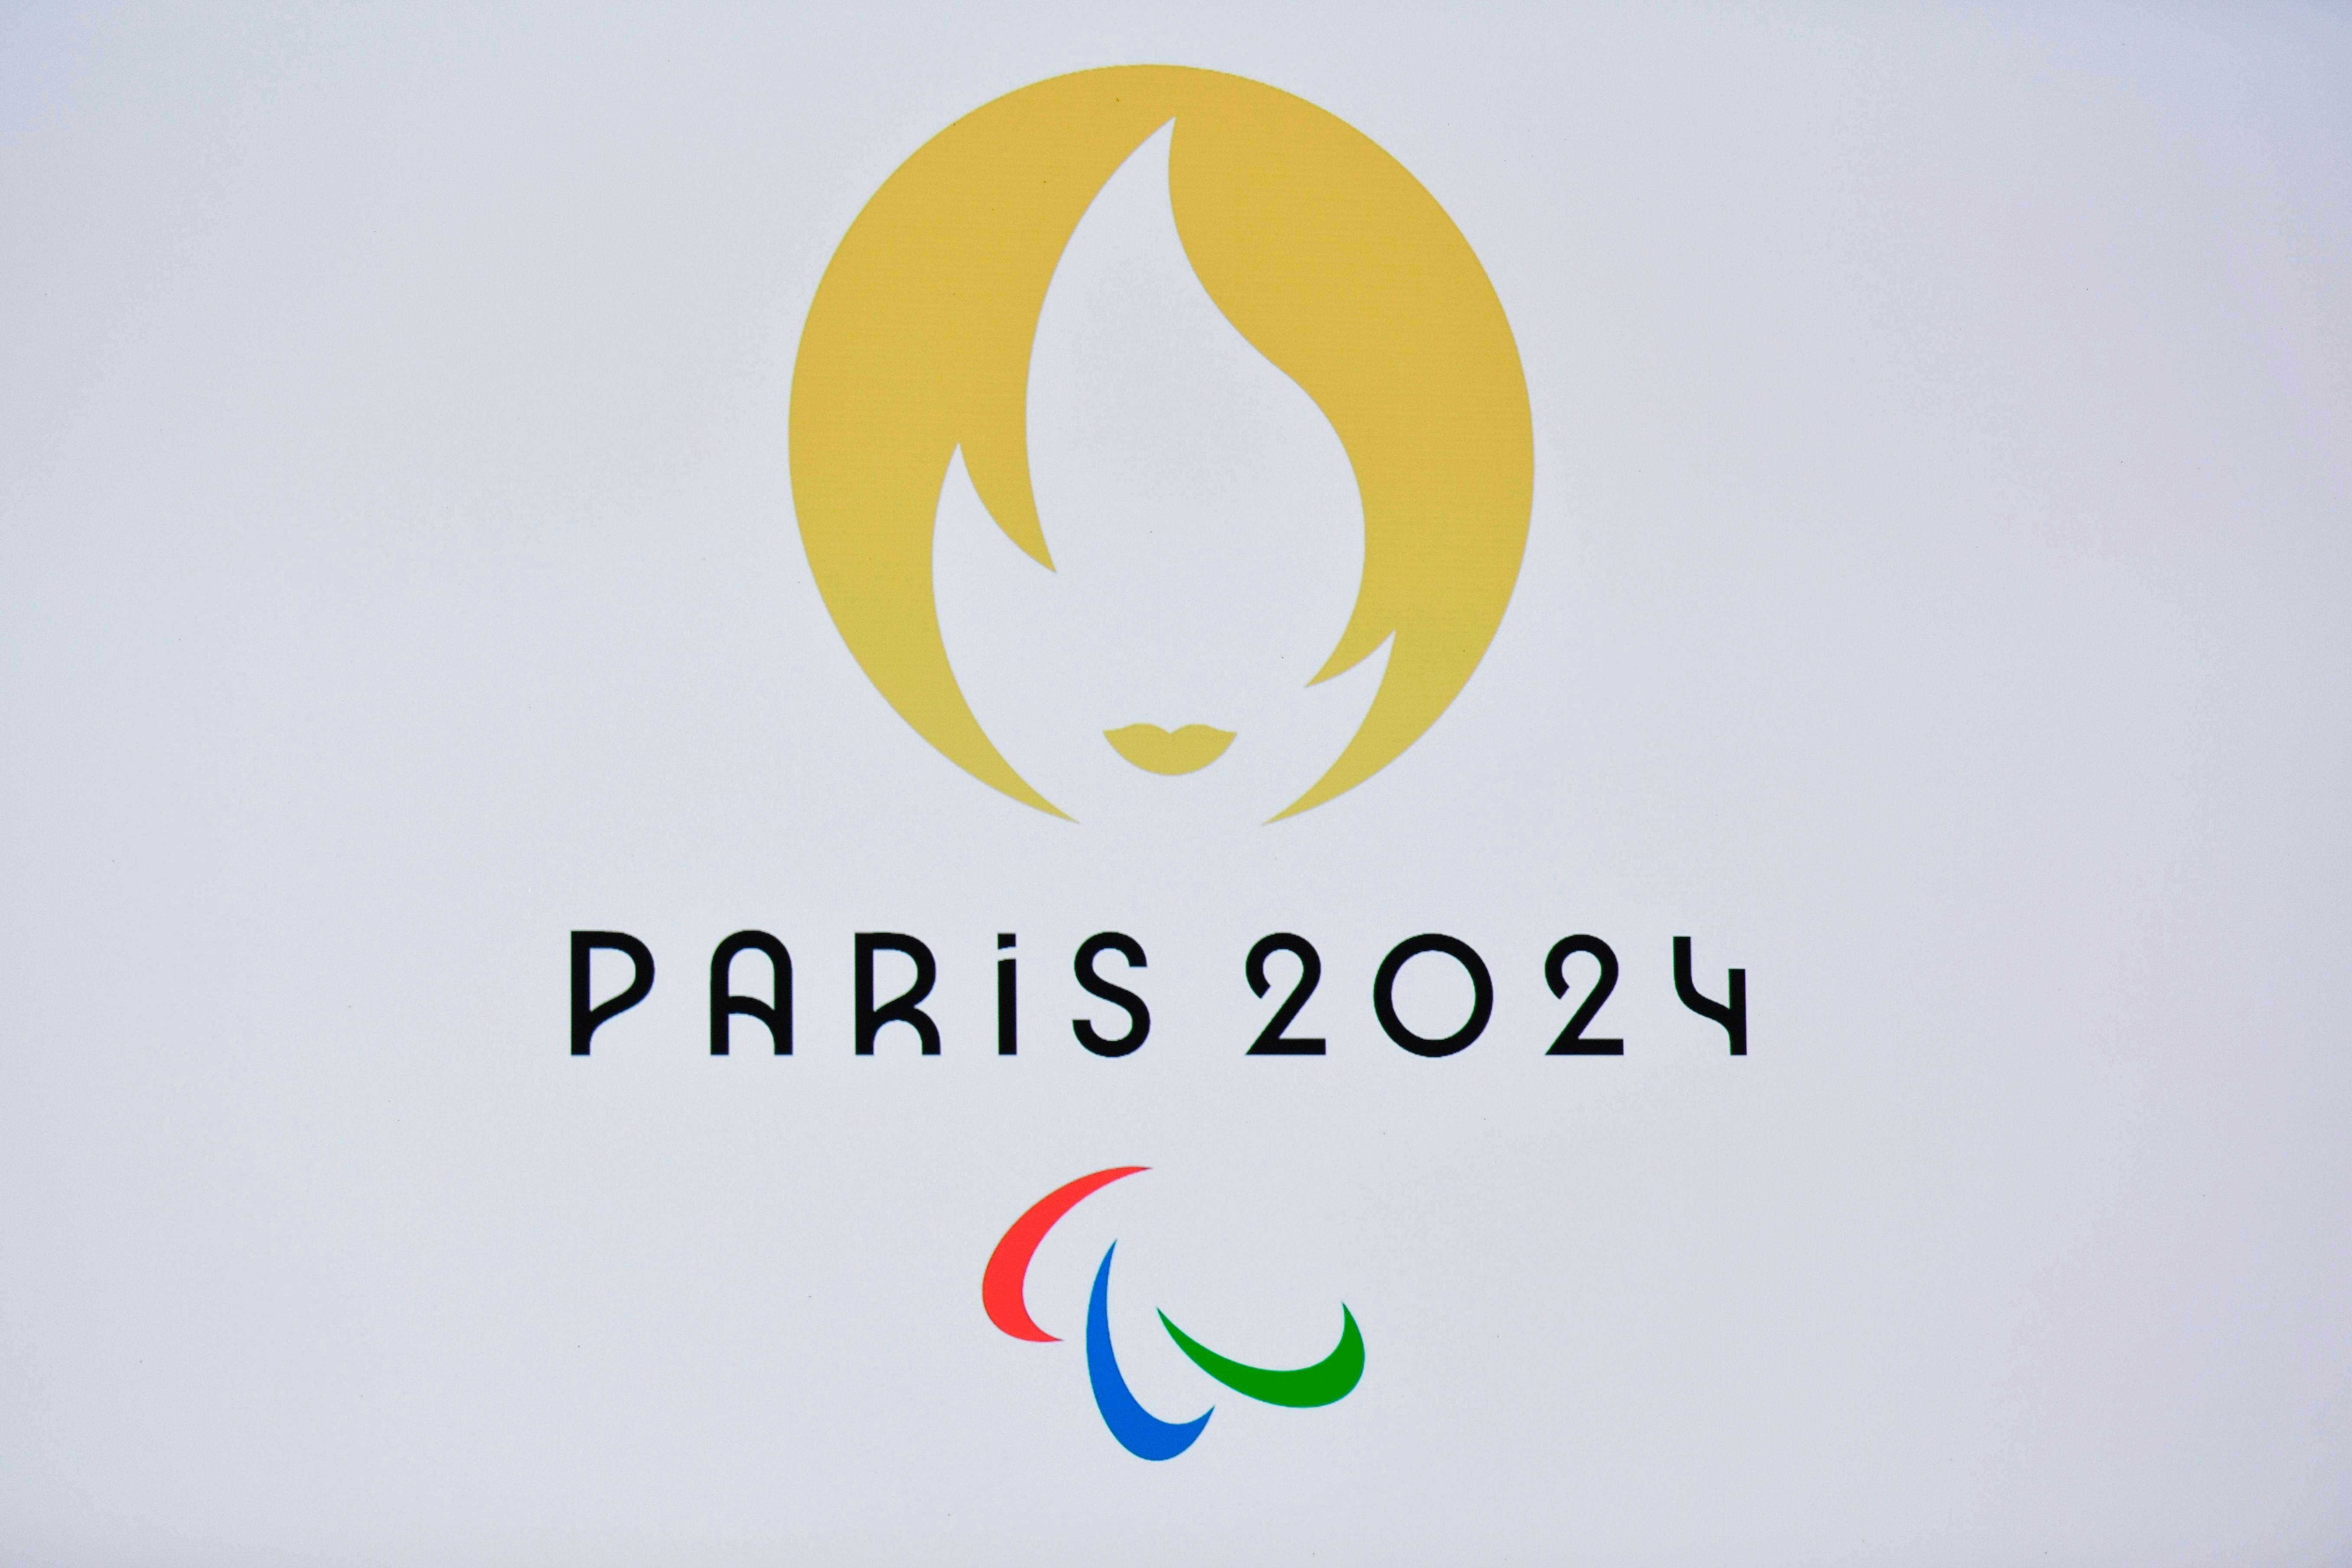 Paris' 2024 Olympics logo looks like a 'Karen,' according to critics ...